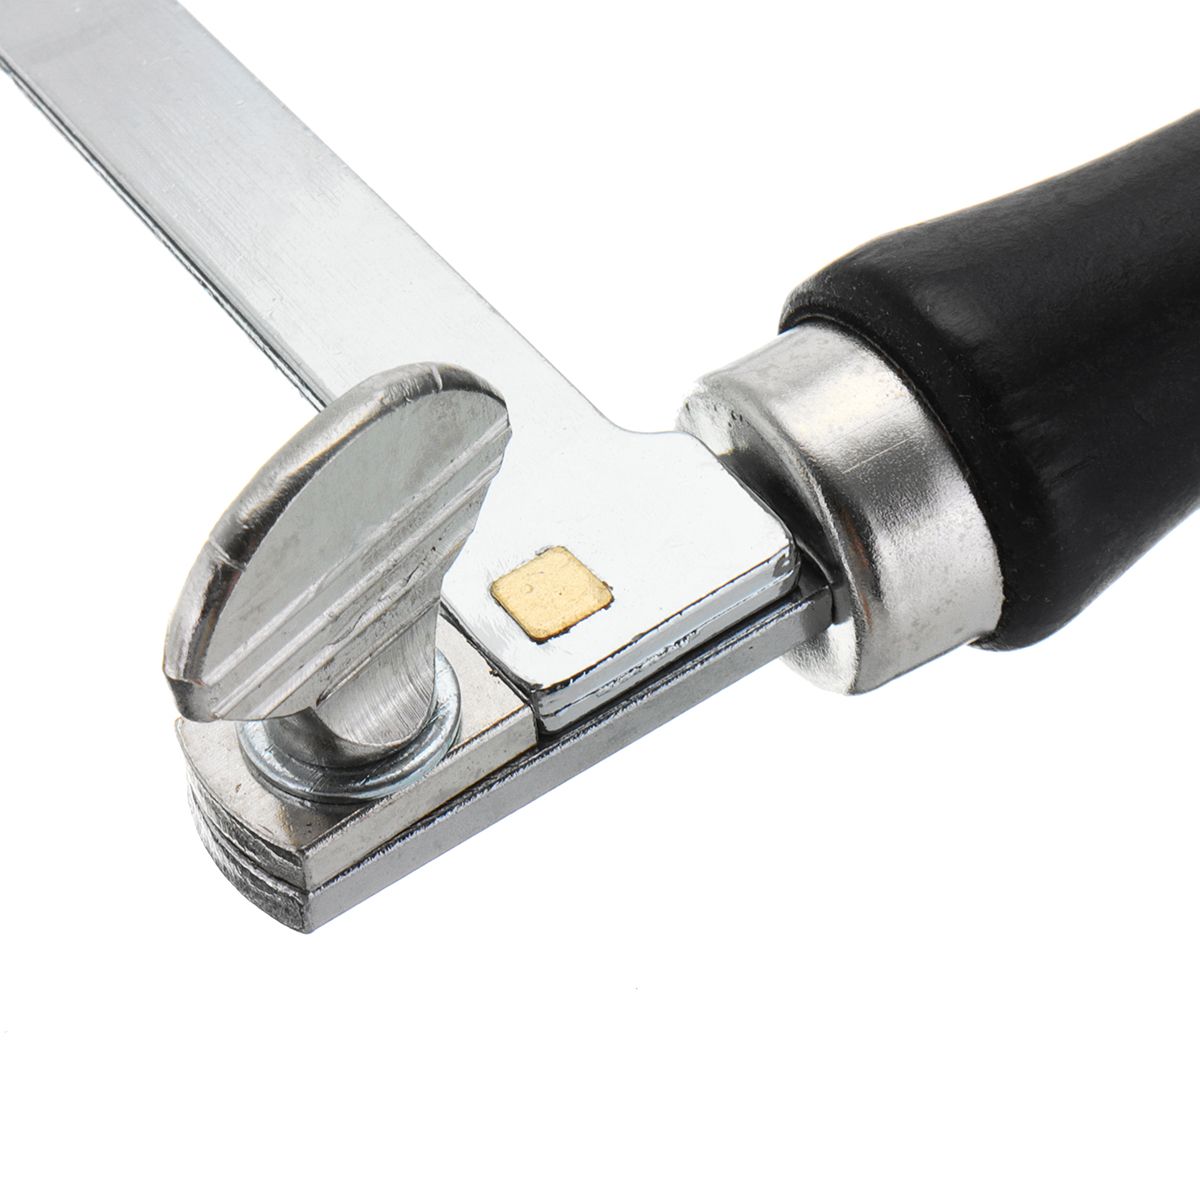 Adjustable-Jewelry-Saws-Frame-DIY-Jeweler-Making-Repair-Tool-with-Blade-1417335